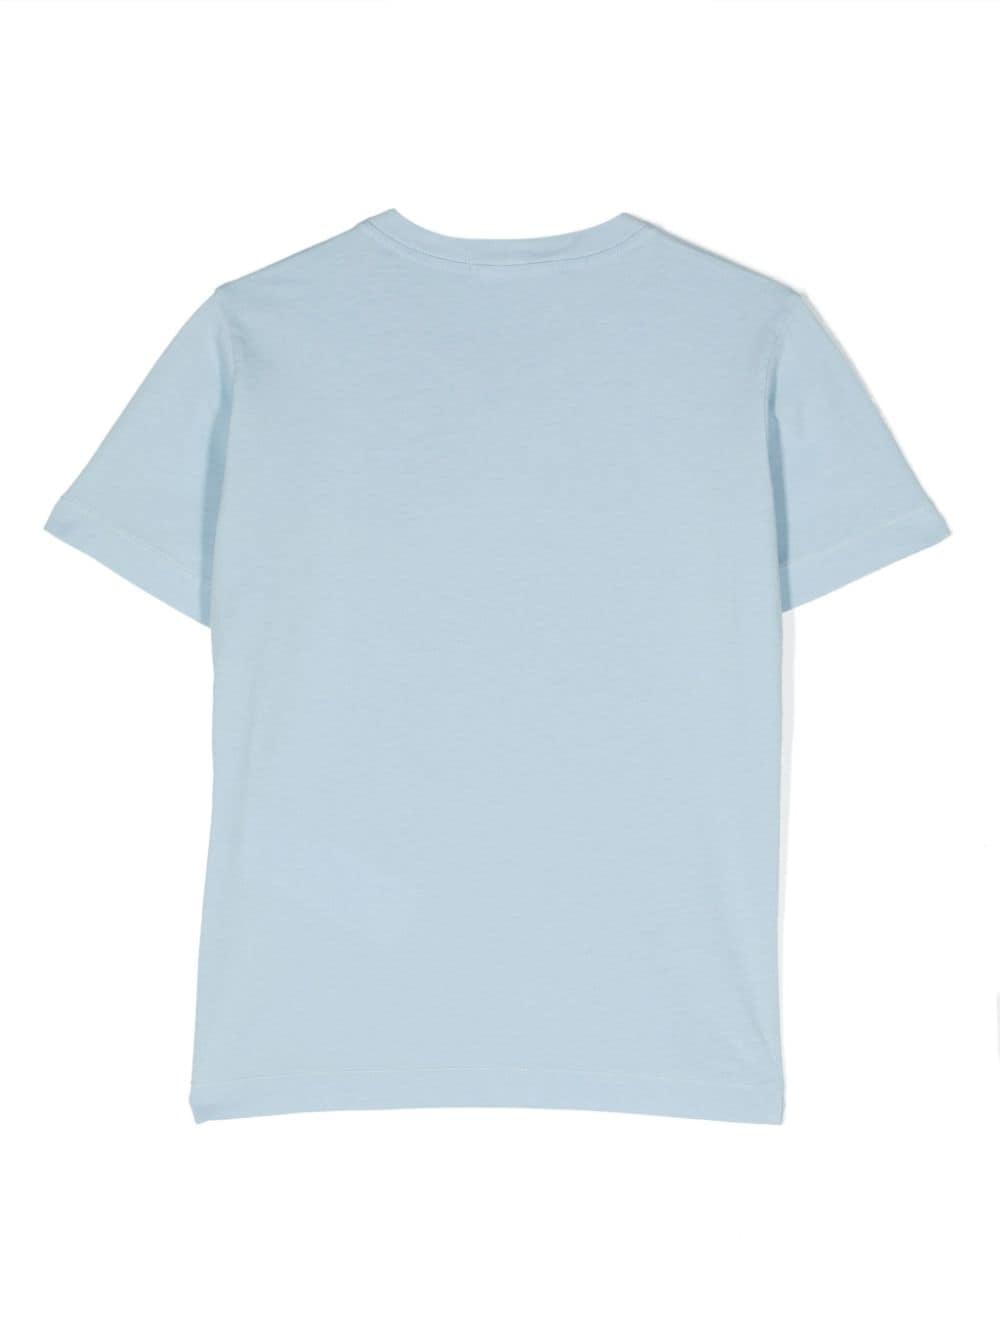 T-shirt bleu clair unisexe